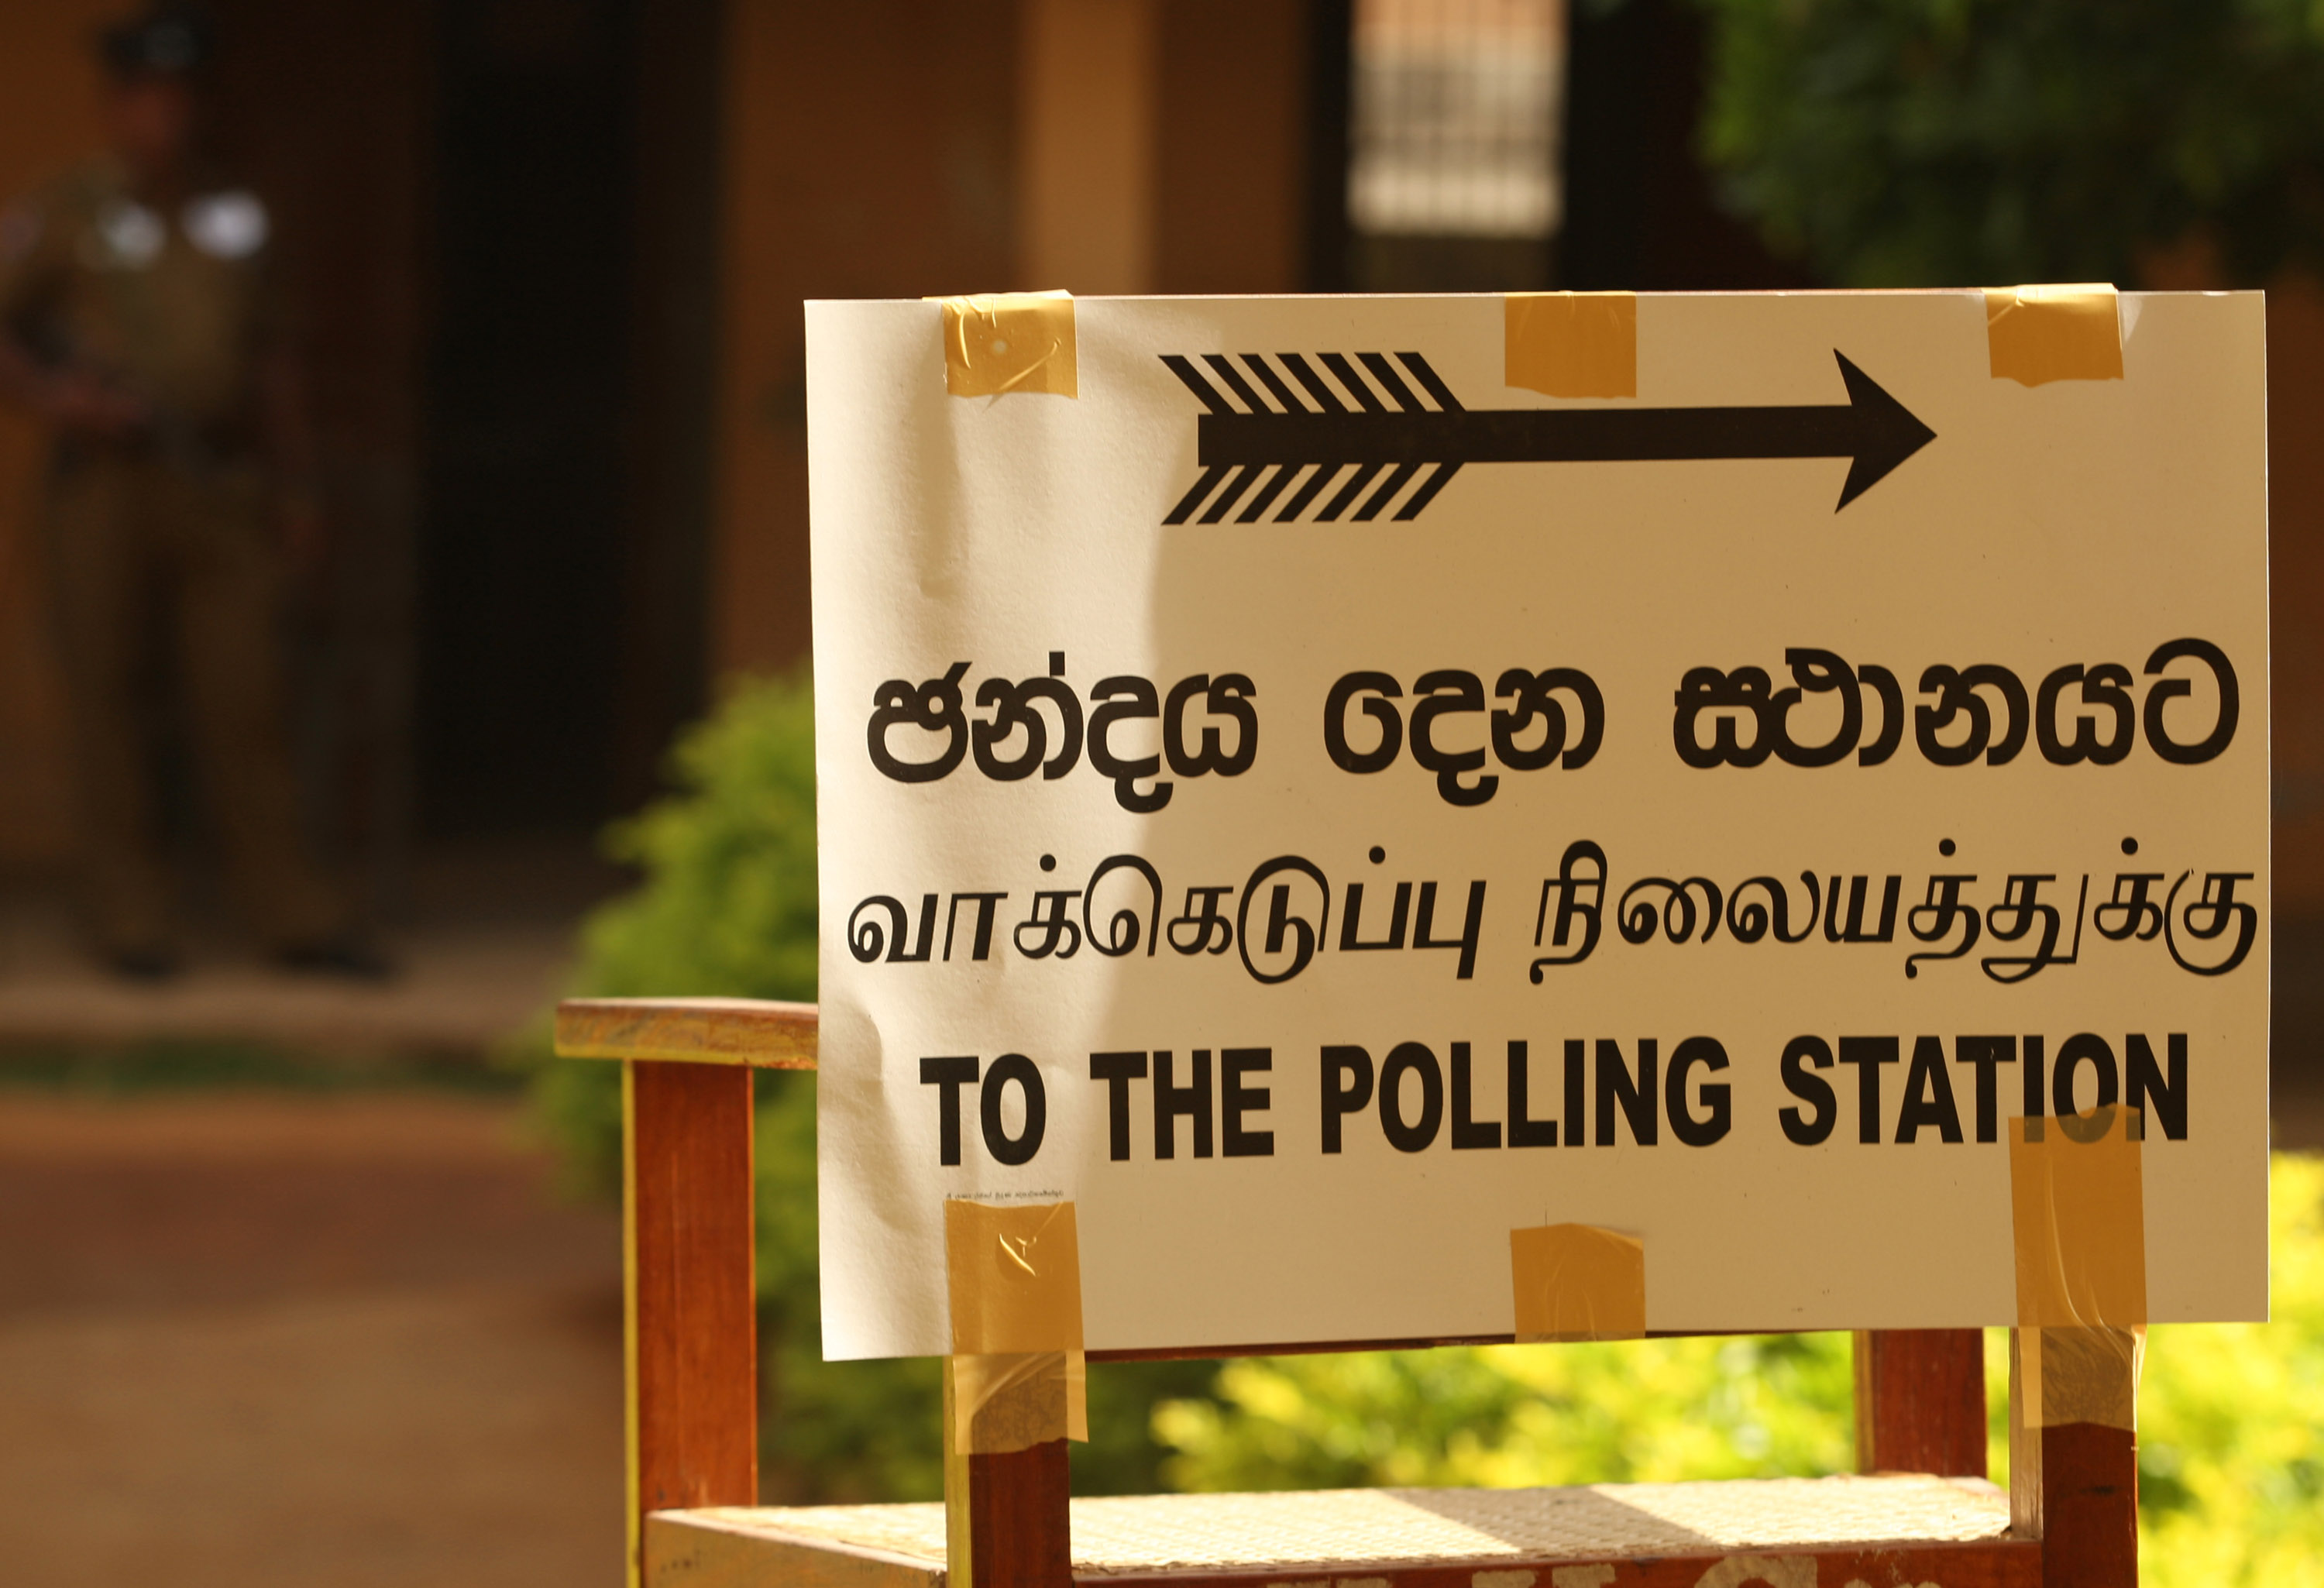 PC polls under old electoral system?